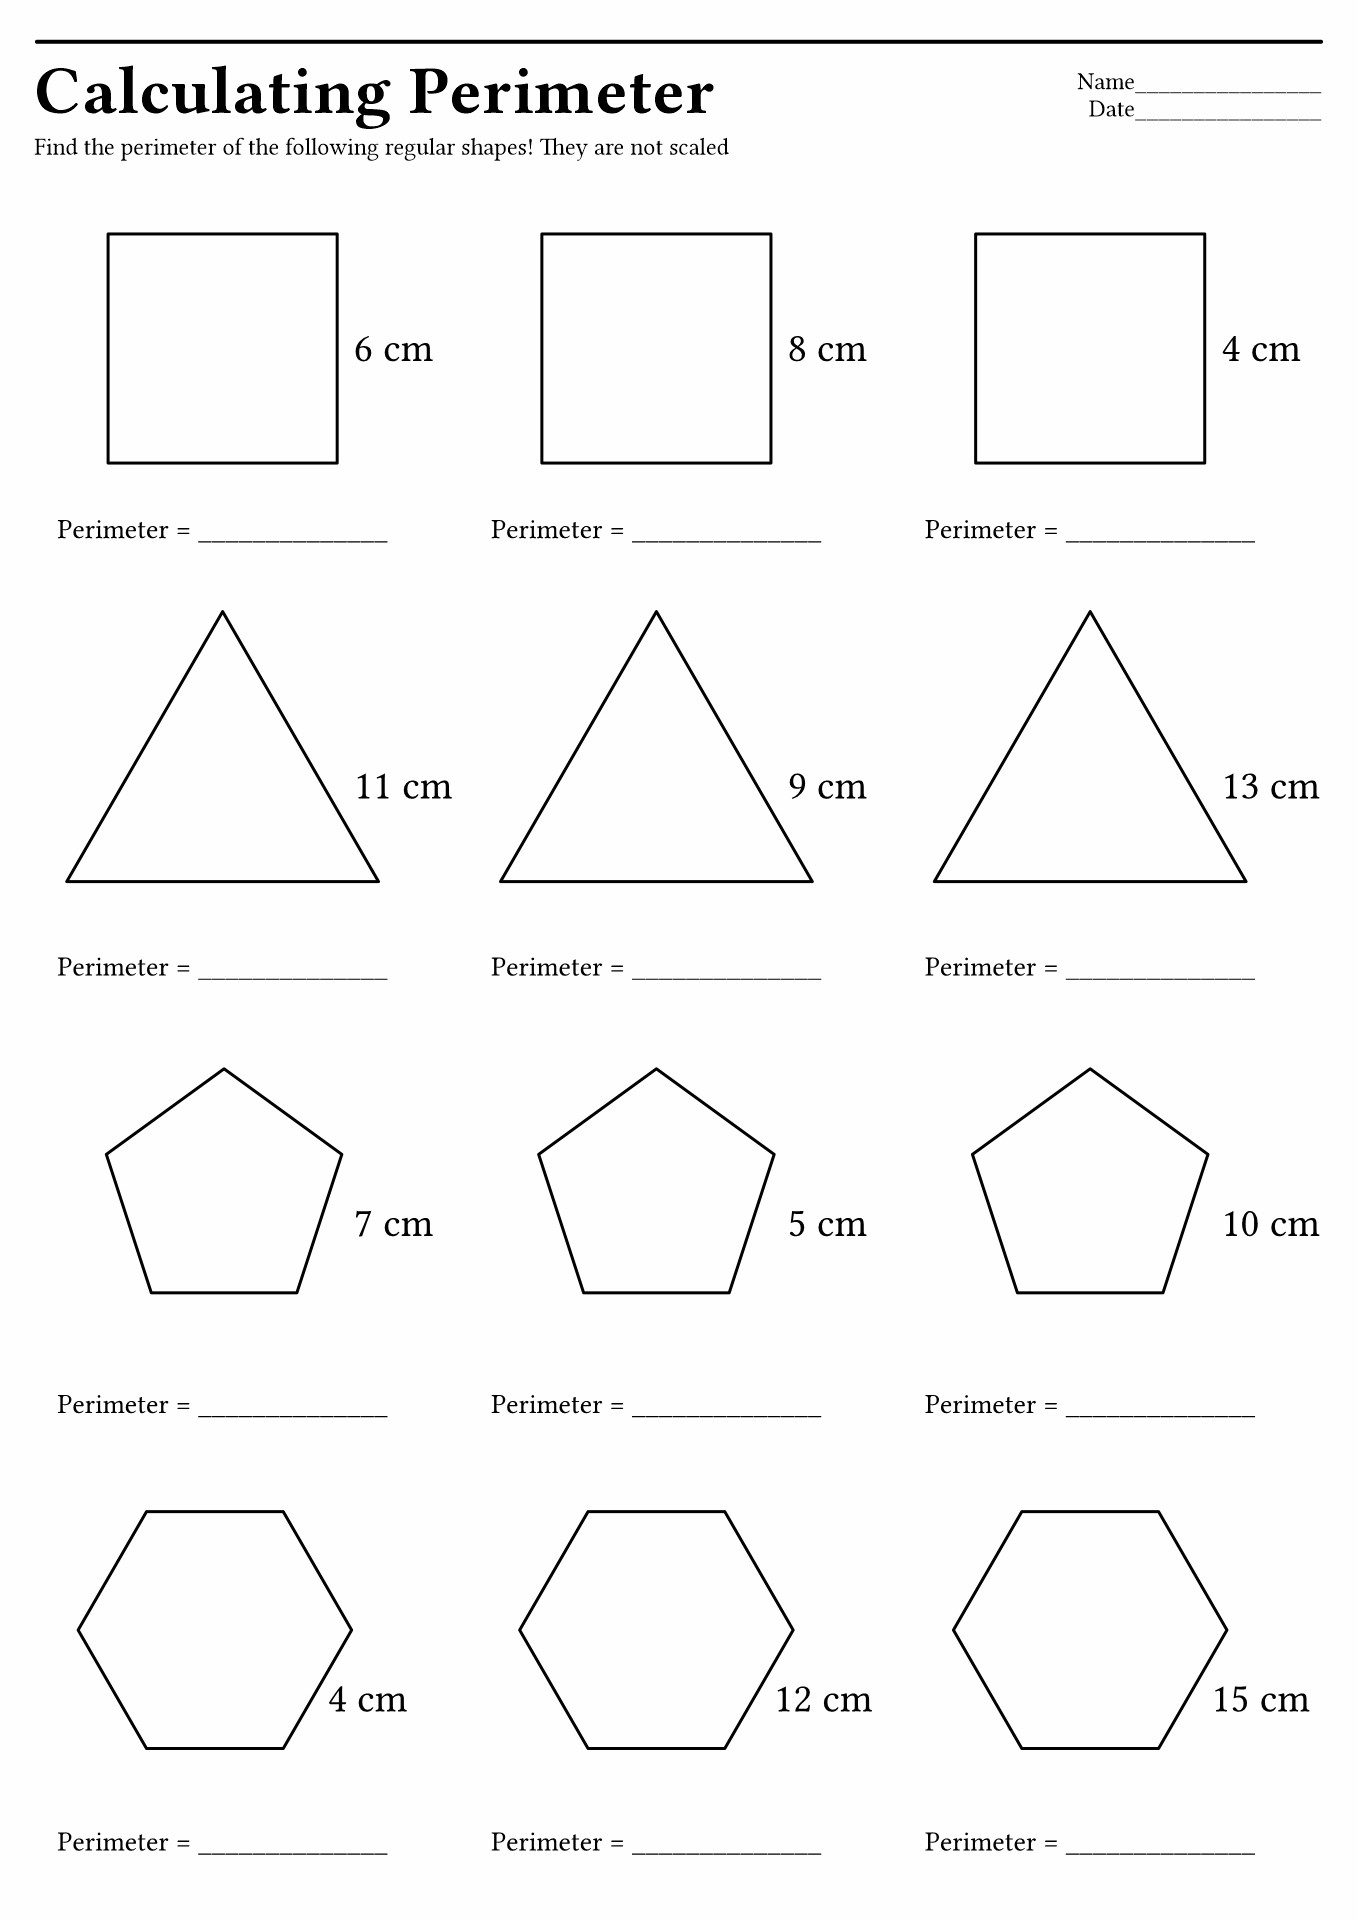 Perimeter of Regular Polygons Worksheet Image